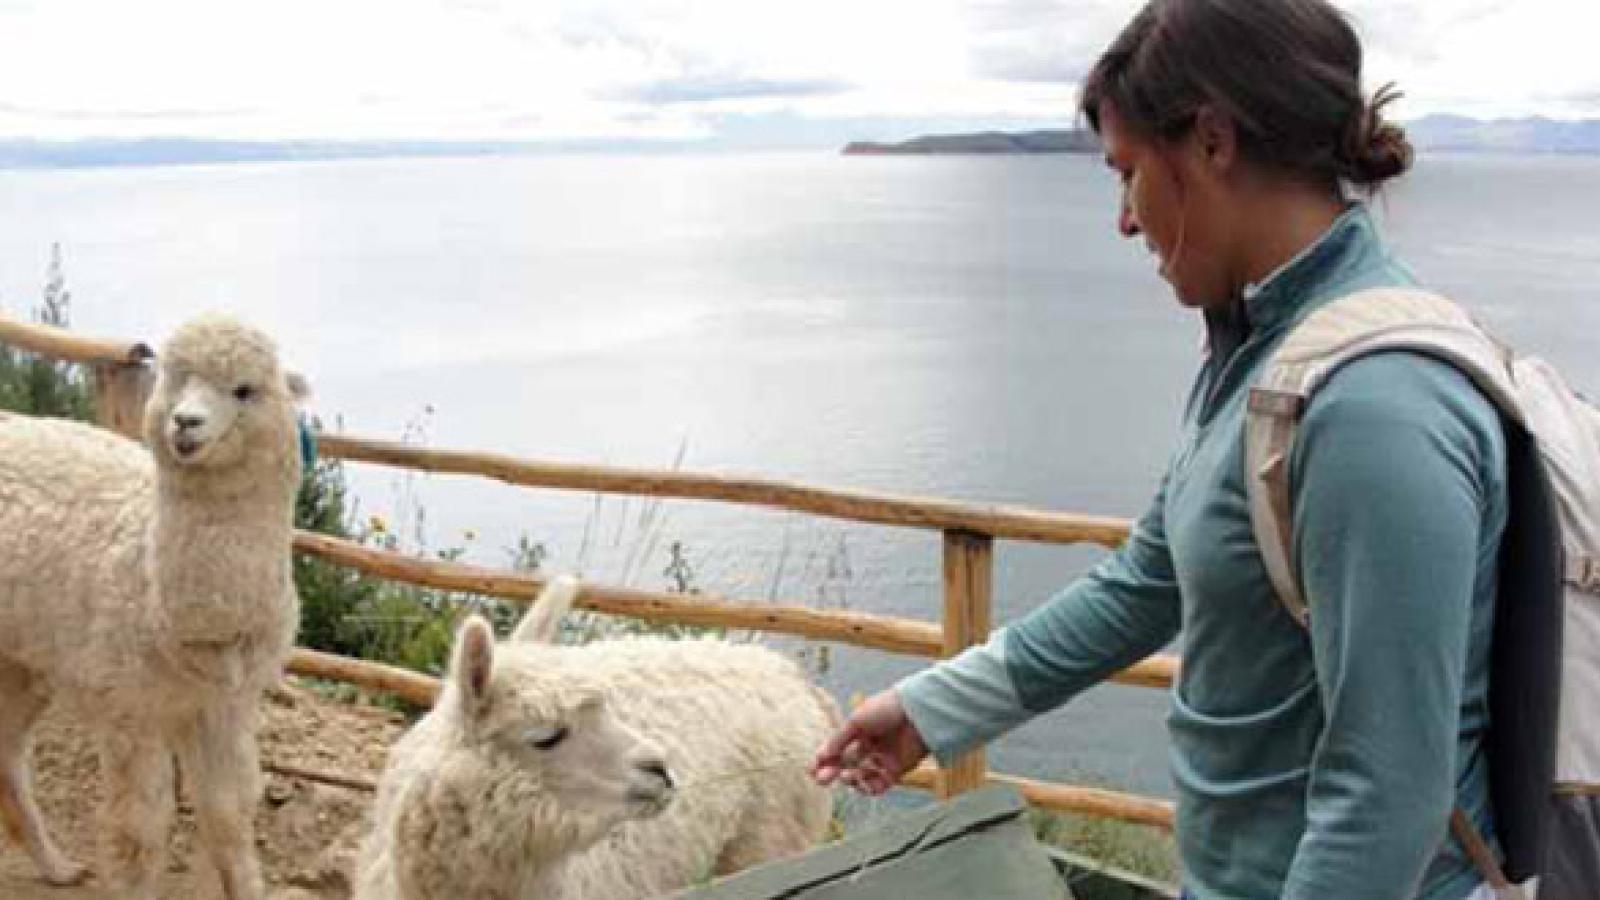 Ellen Noe feeds a sheep in Quechua.